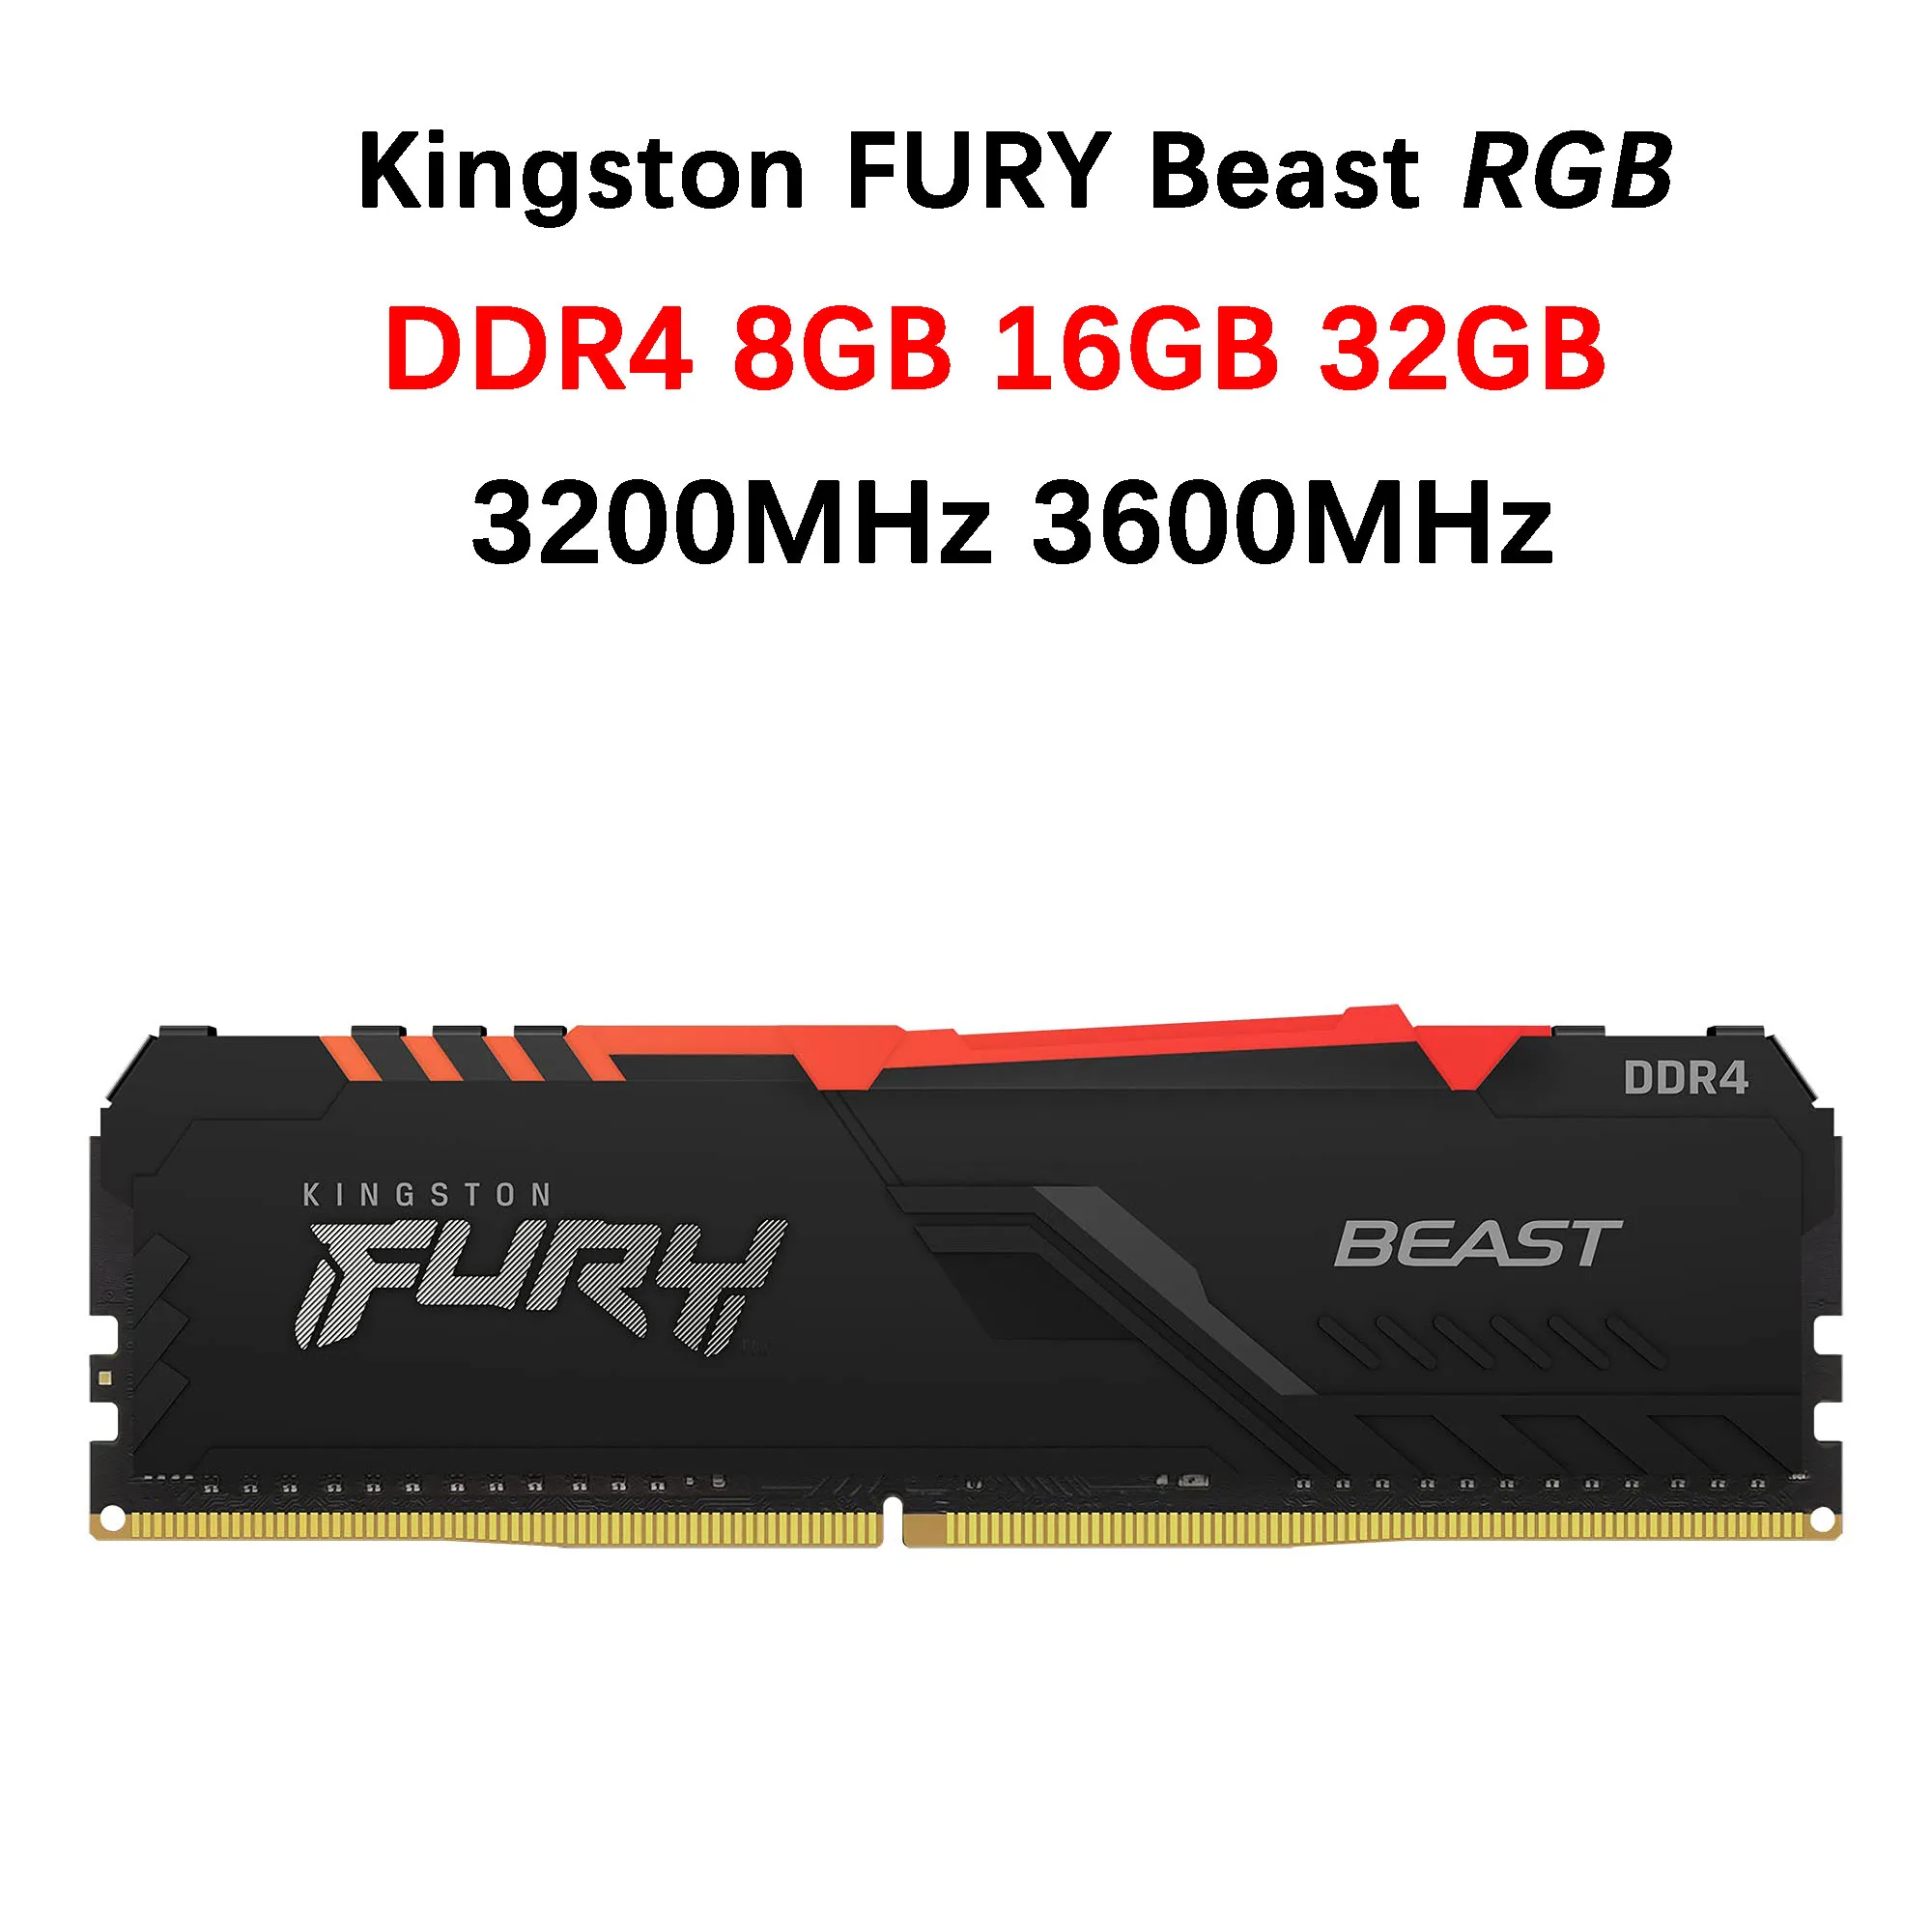 

Kingston FURY Beast DDR4 RAM RGB 8GB 16GB 32GB 3200MHz 3600MHz Desktop AMD Intel CPU Motherboard Memory RAMs 288 PIN 1.35V